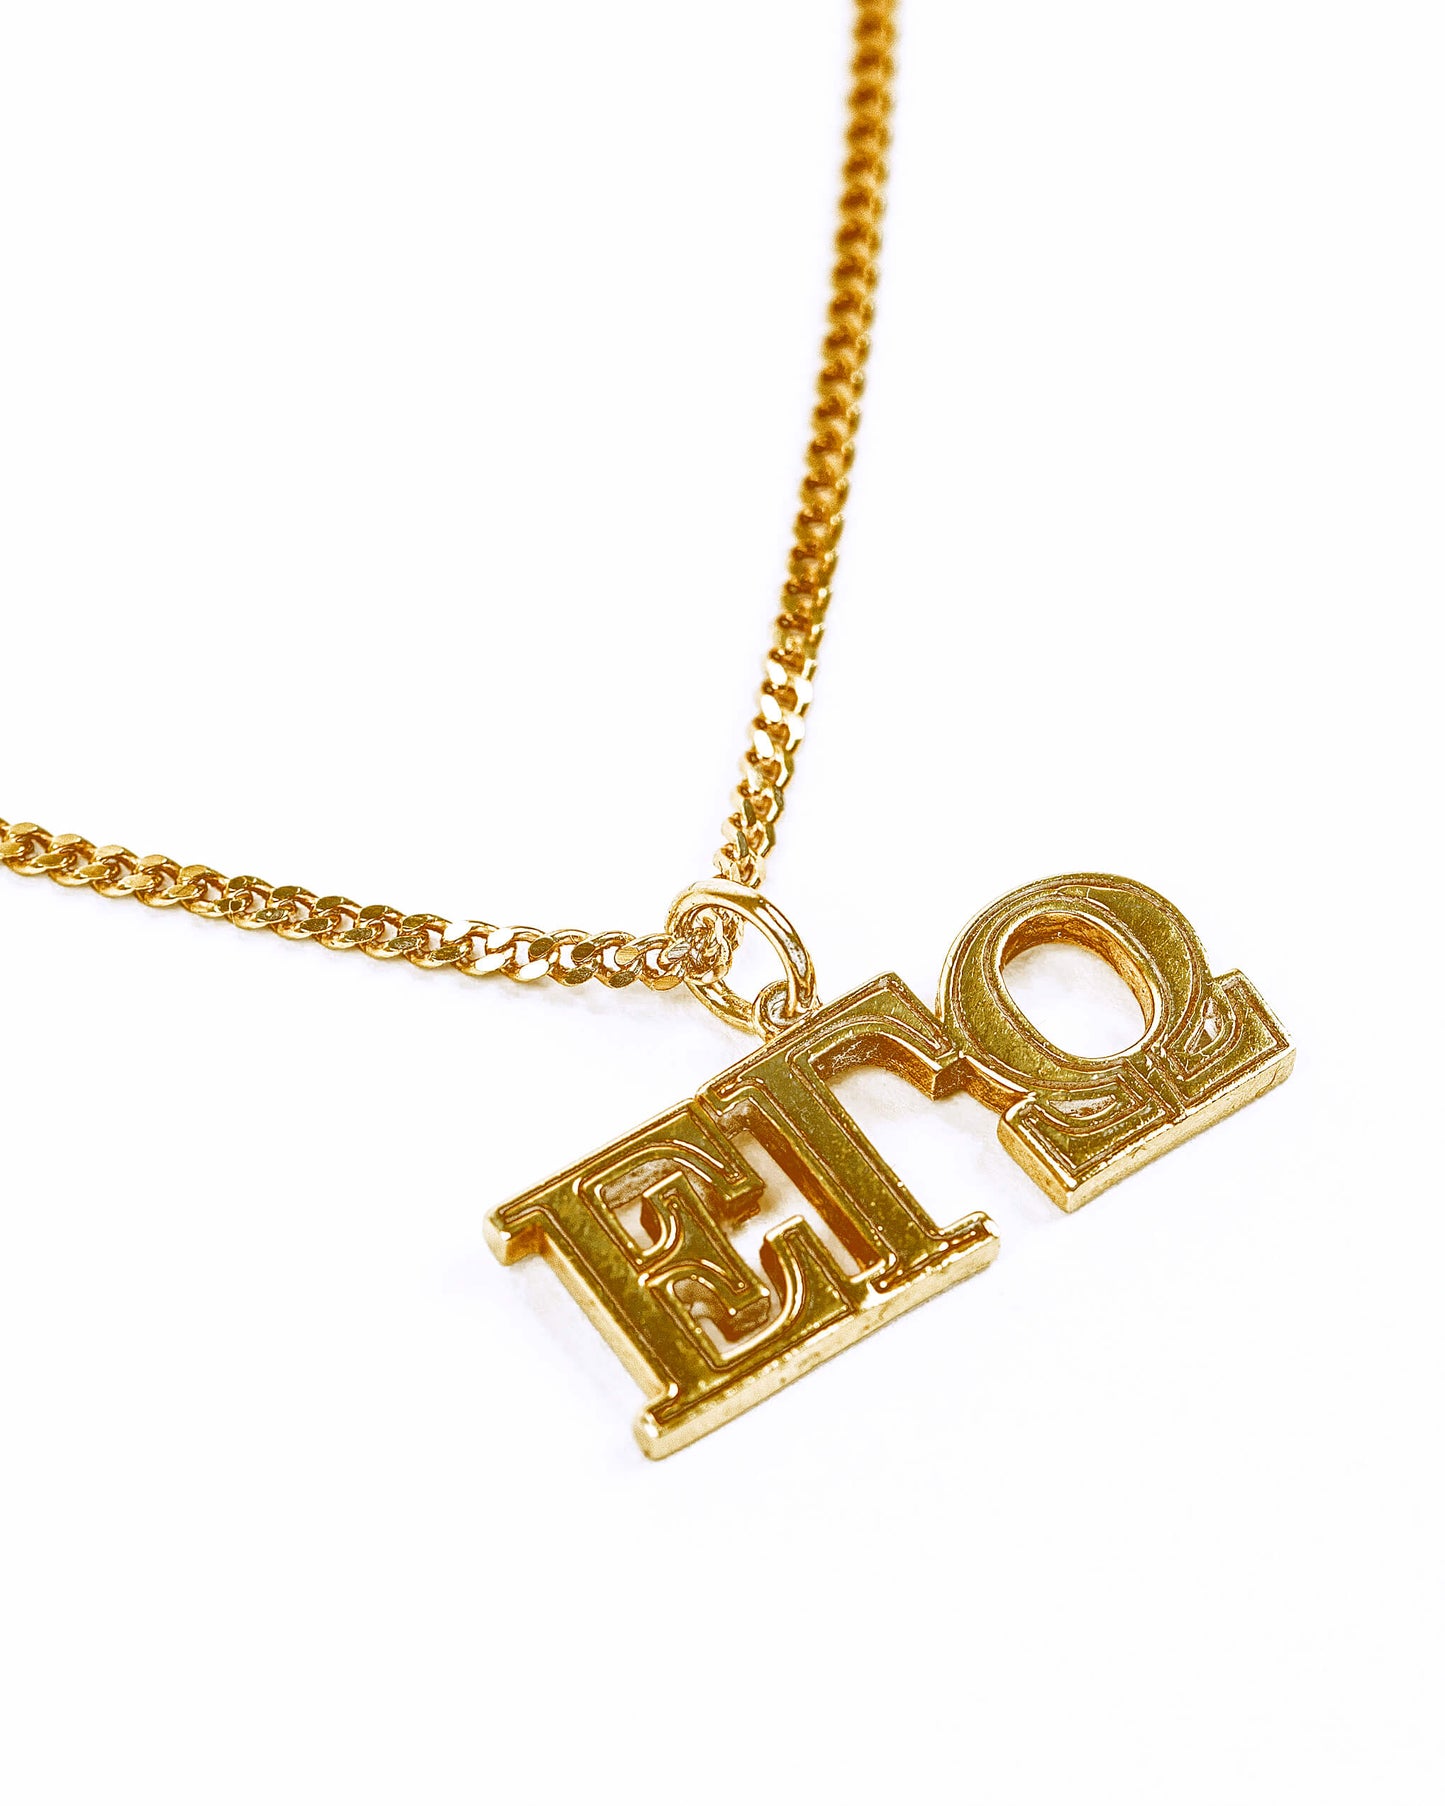 The ΕΓΩ pendant necklace